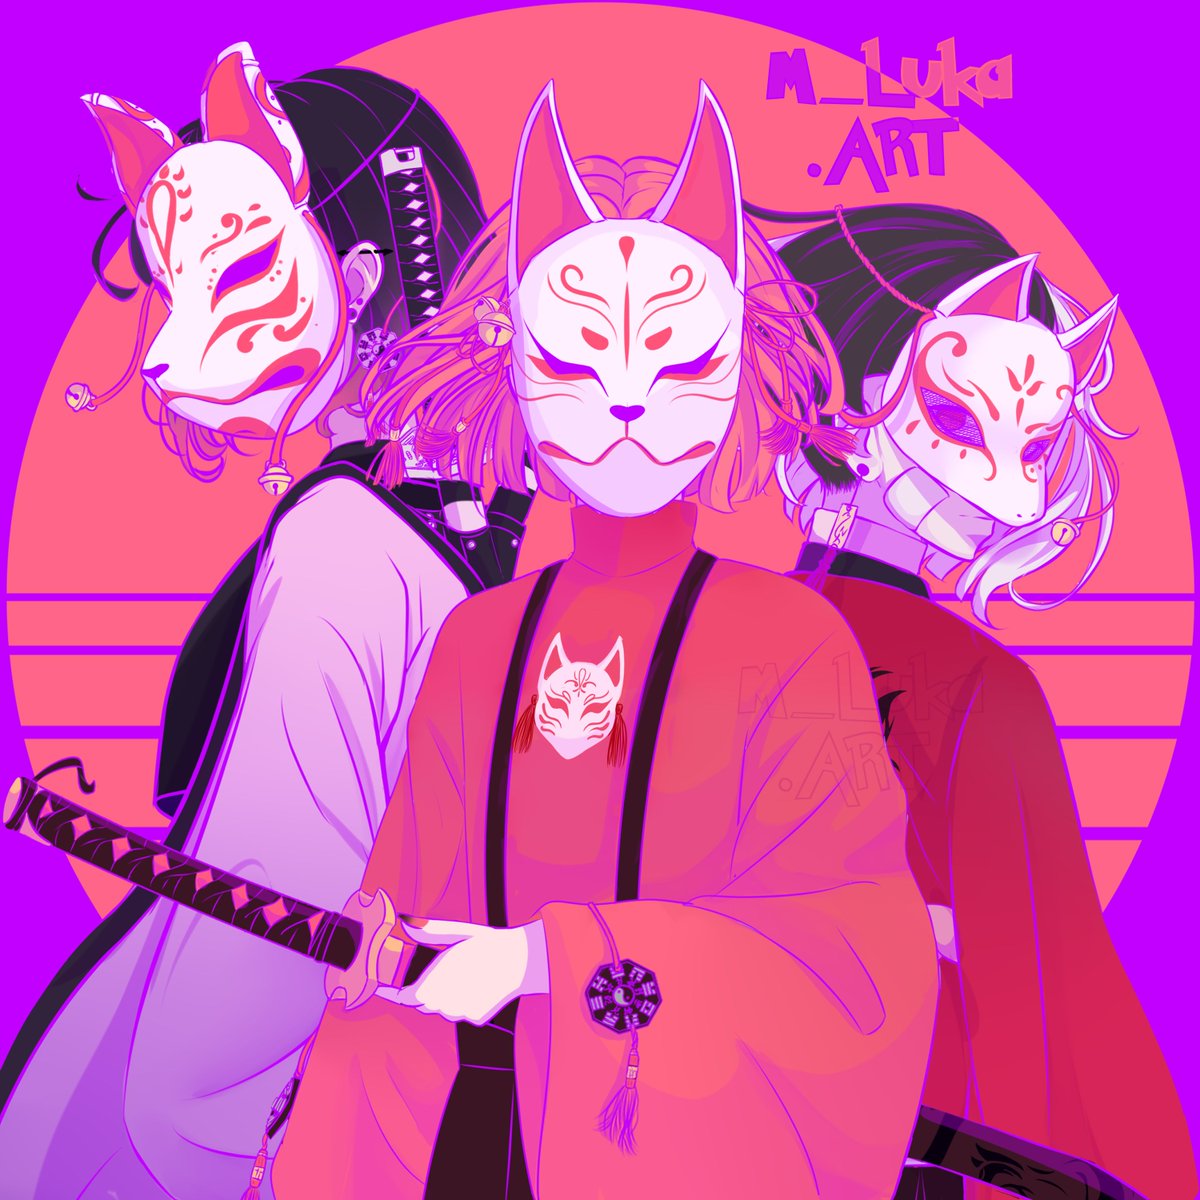 Clan Kitsune
(Hana /Yin / Luka)
#m_lukaart #kitsunemask #samuraiart #digitalart #art #anime #kitsune #kitsunegirl
#samuraigirl